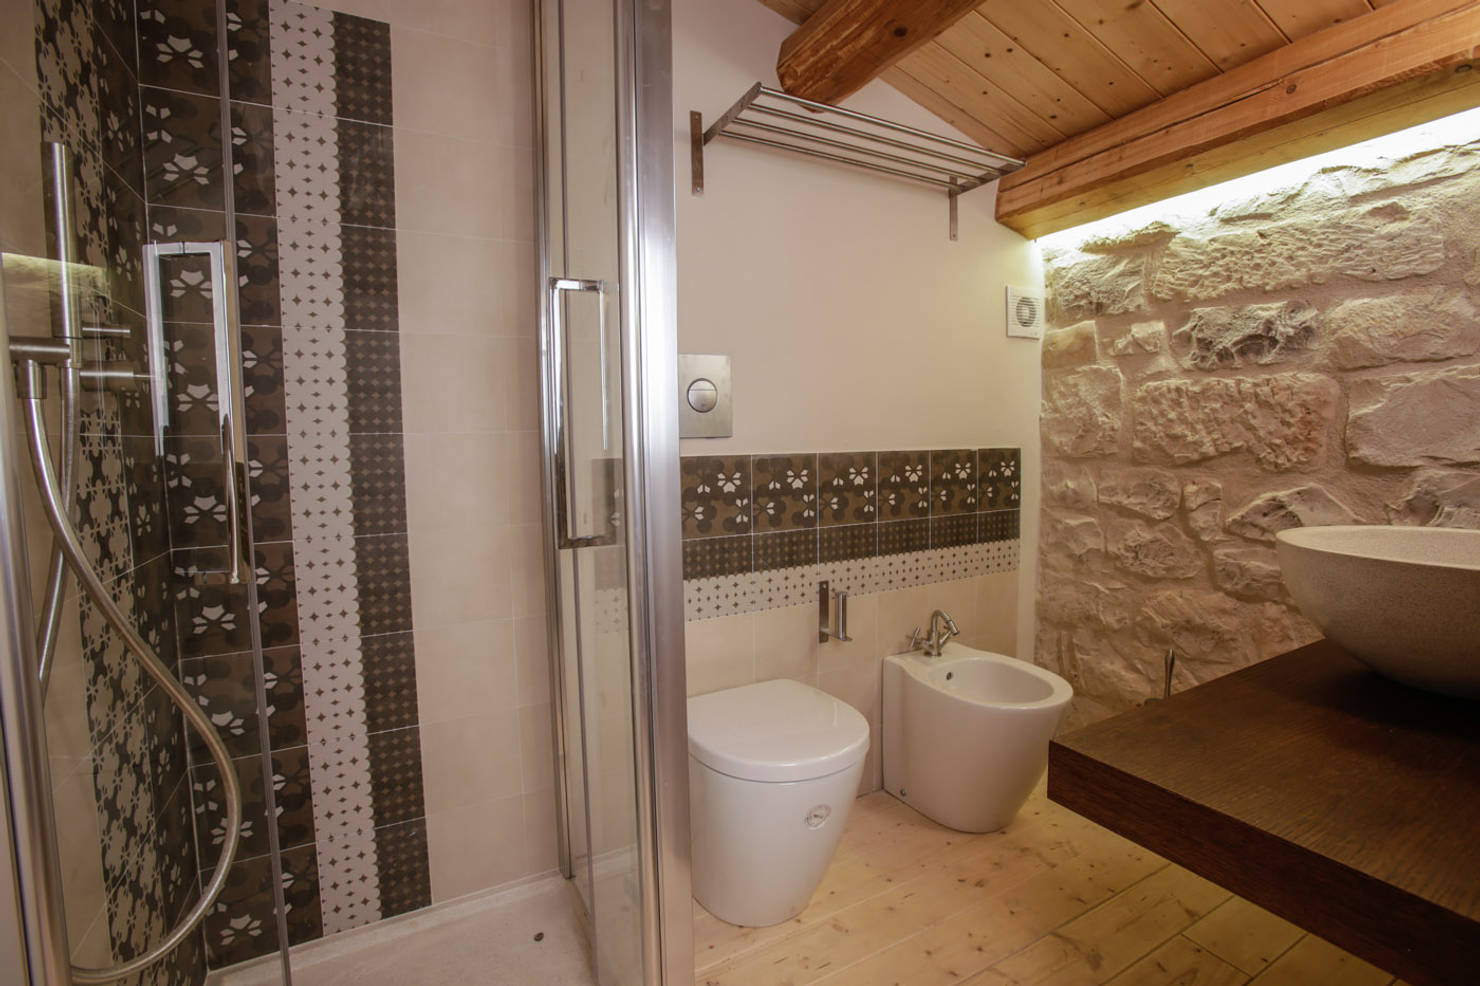 На фото - 10 красивых ванных комнат, оформленных натуральным камнем
				